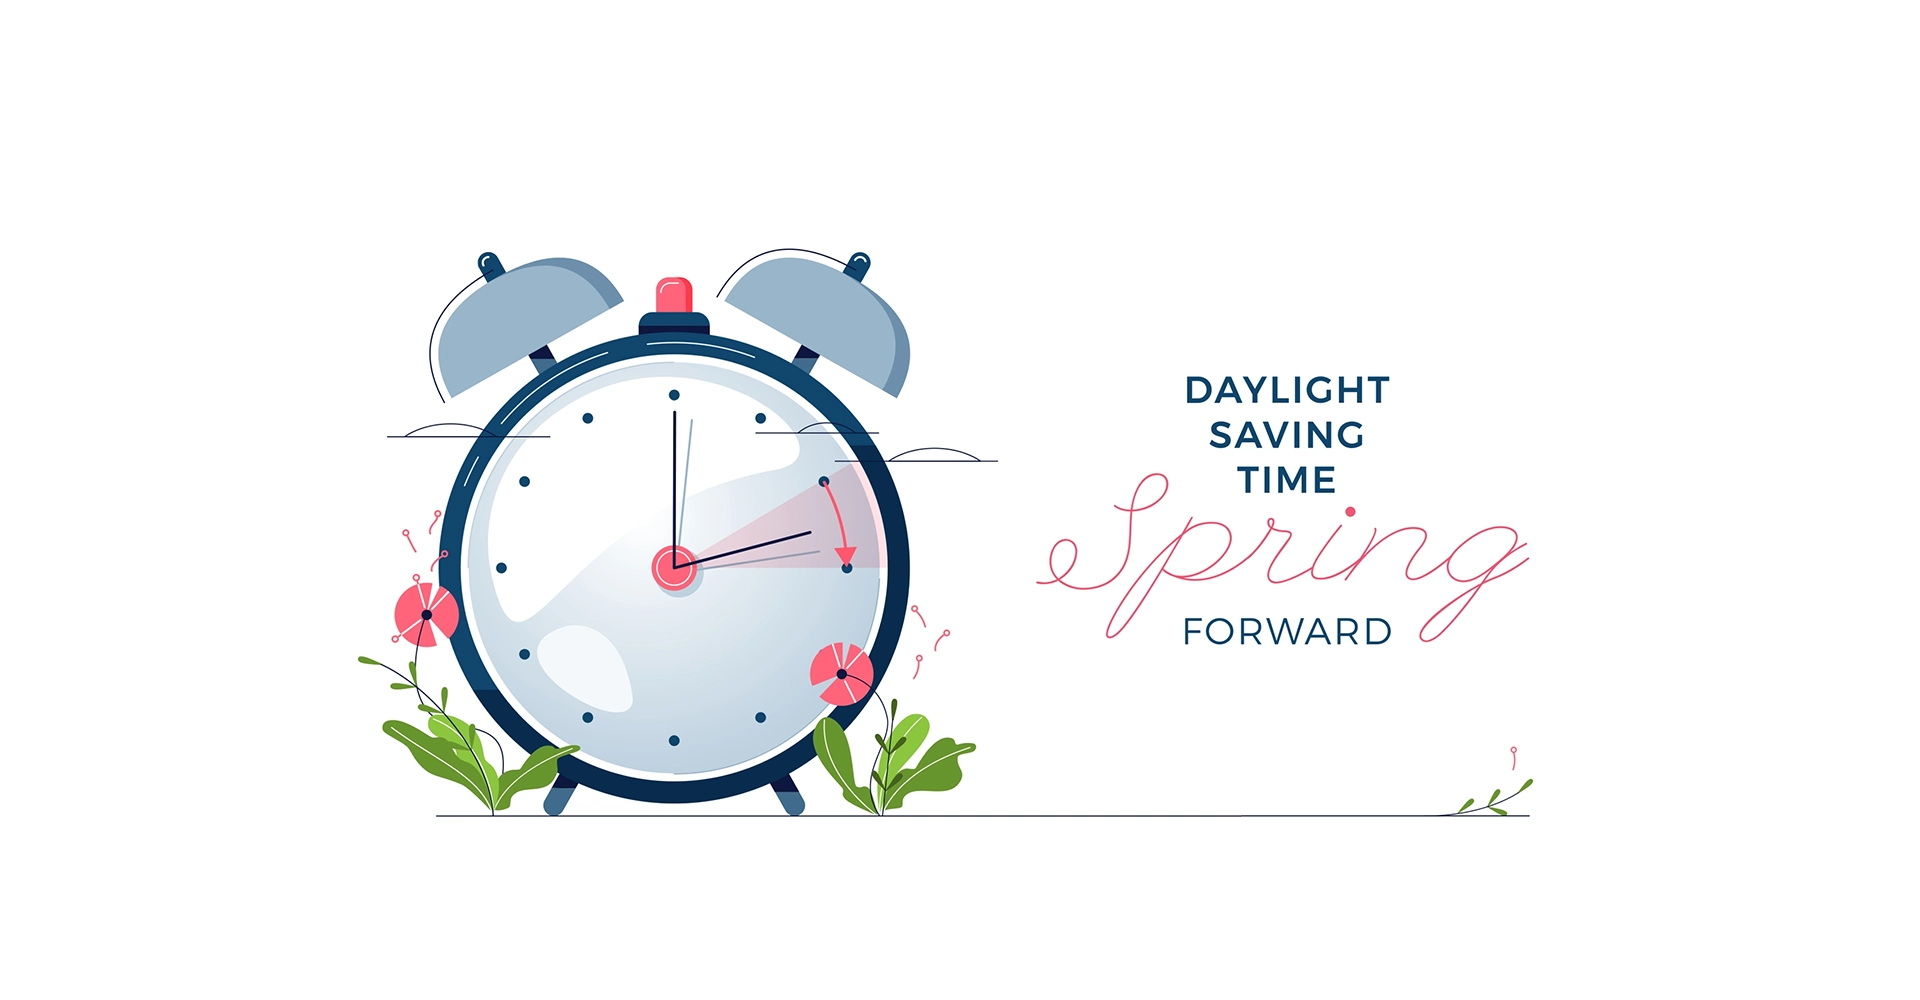  Daylight Savings Time: Why do the clocks change?